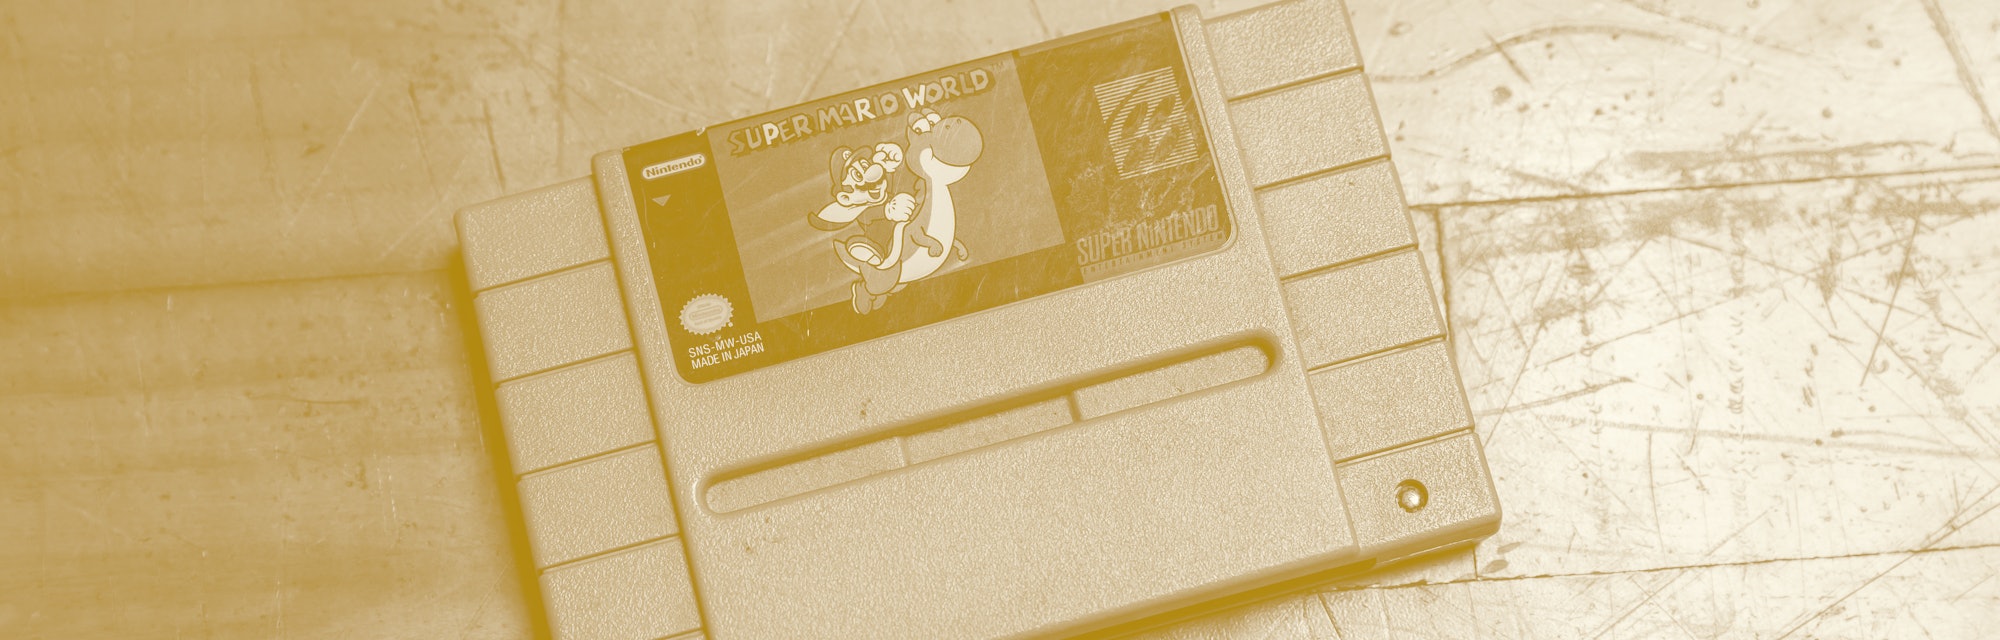 Old Super Mario World Nintendo Cassette Tape for Super Nintendo Game Entertainment System